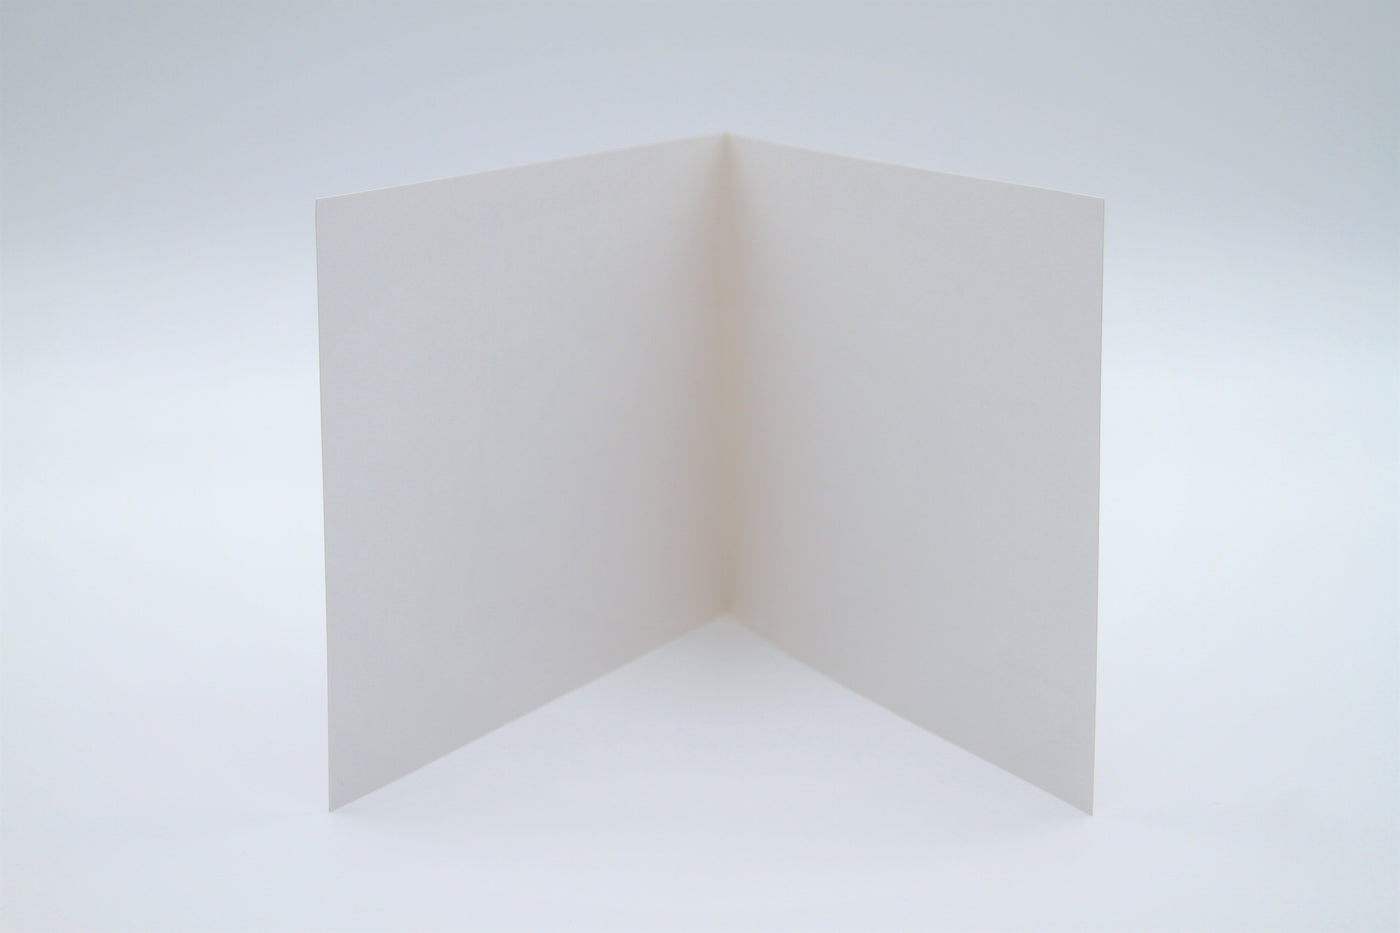 Set of 10: Richard Spare - 'Blue and White Jug' - Art Greetings Card (10.5 x 15 cm - Single Design)